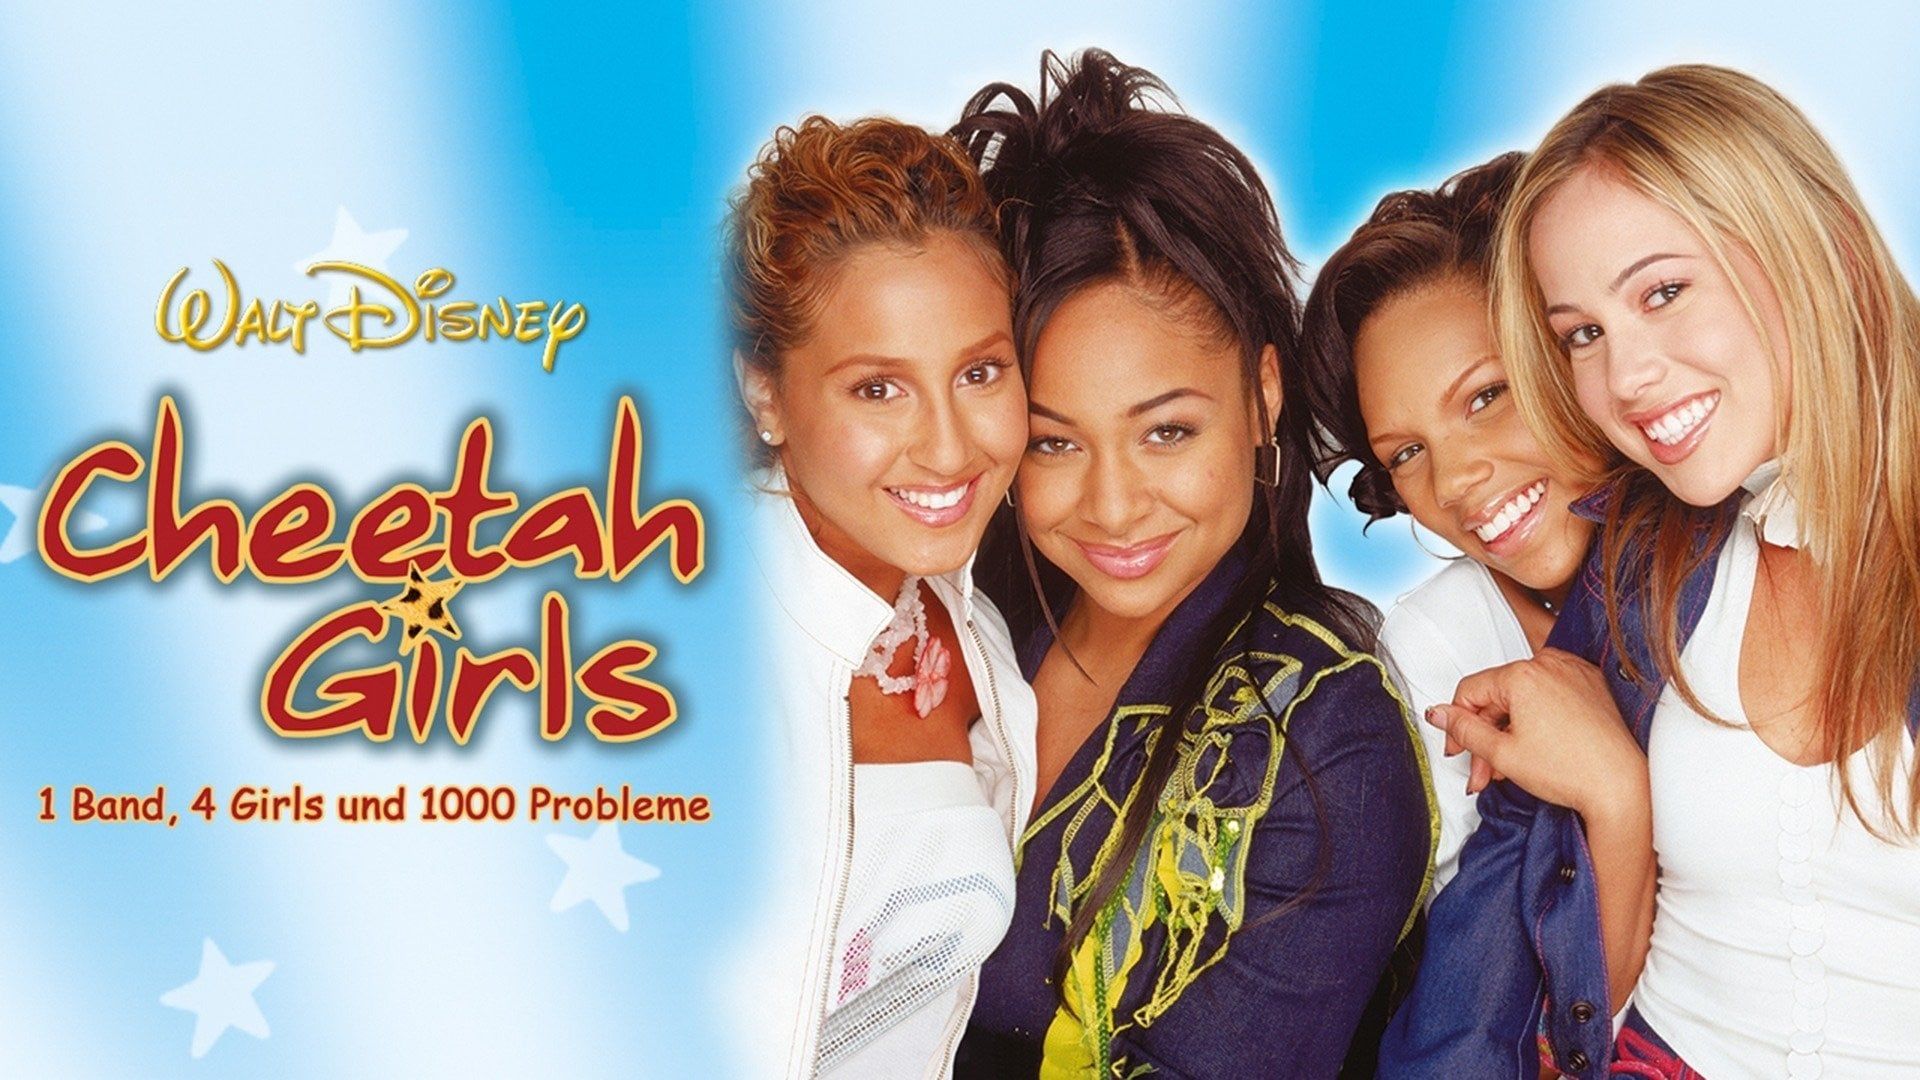 The Cheetah Girls (2003) on Disney+ or Streaming Online